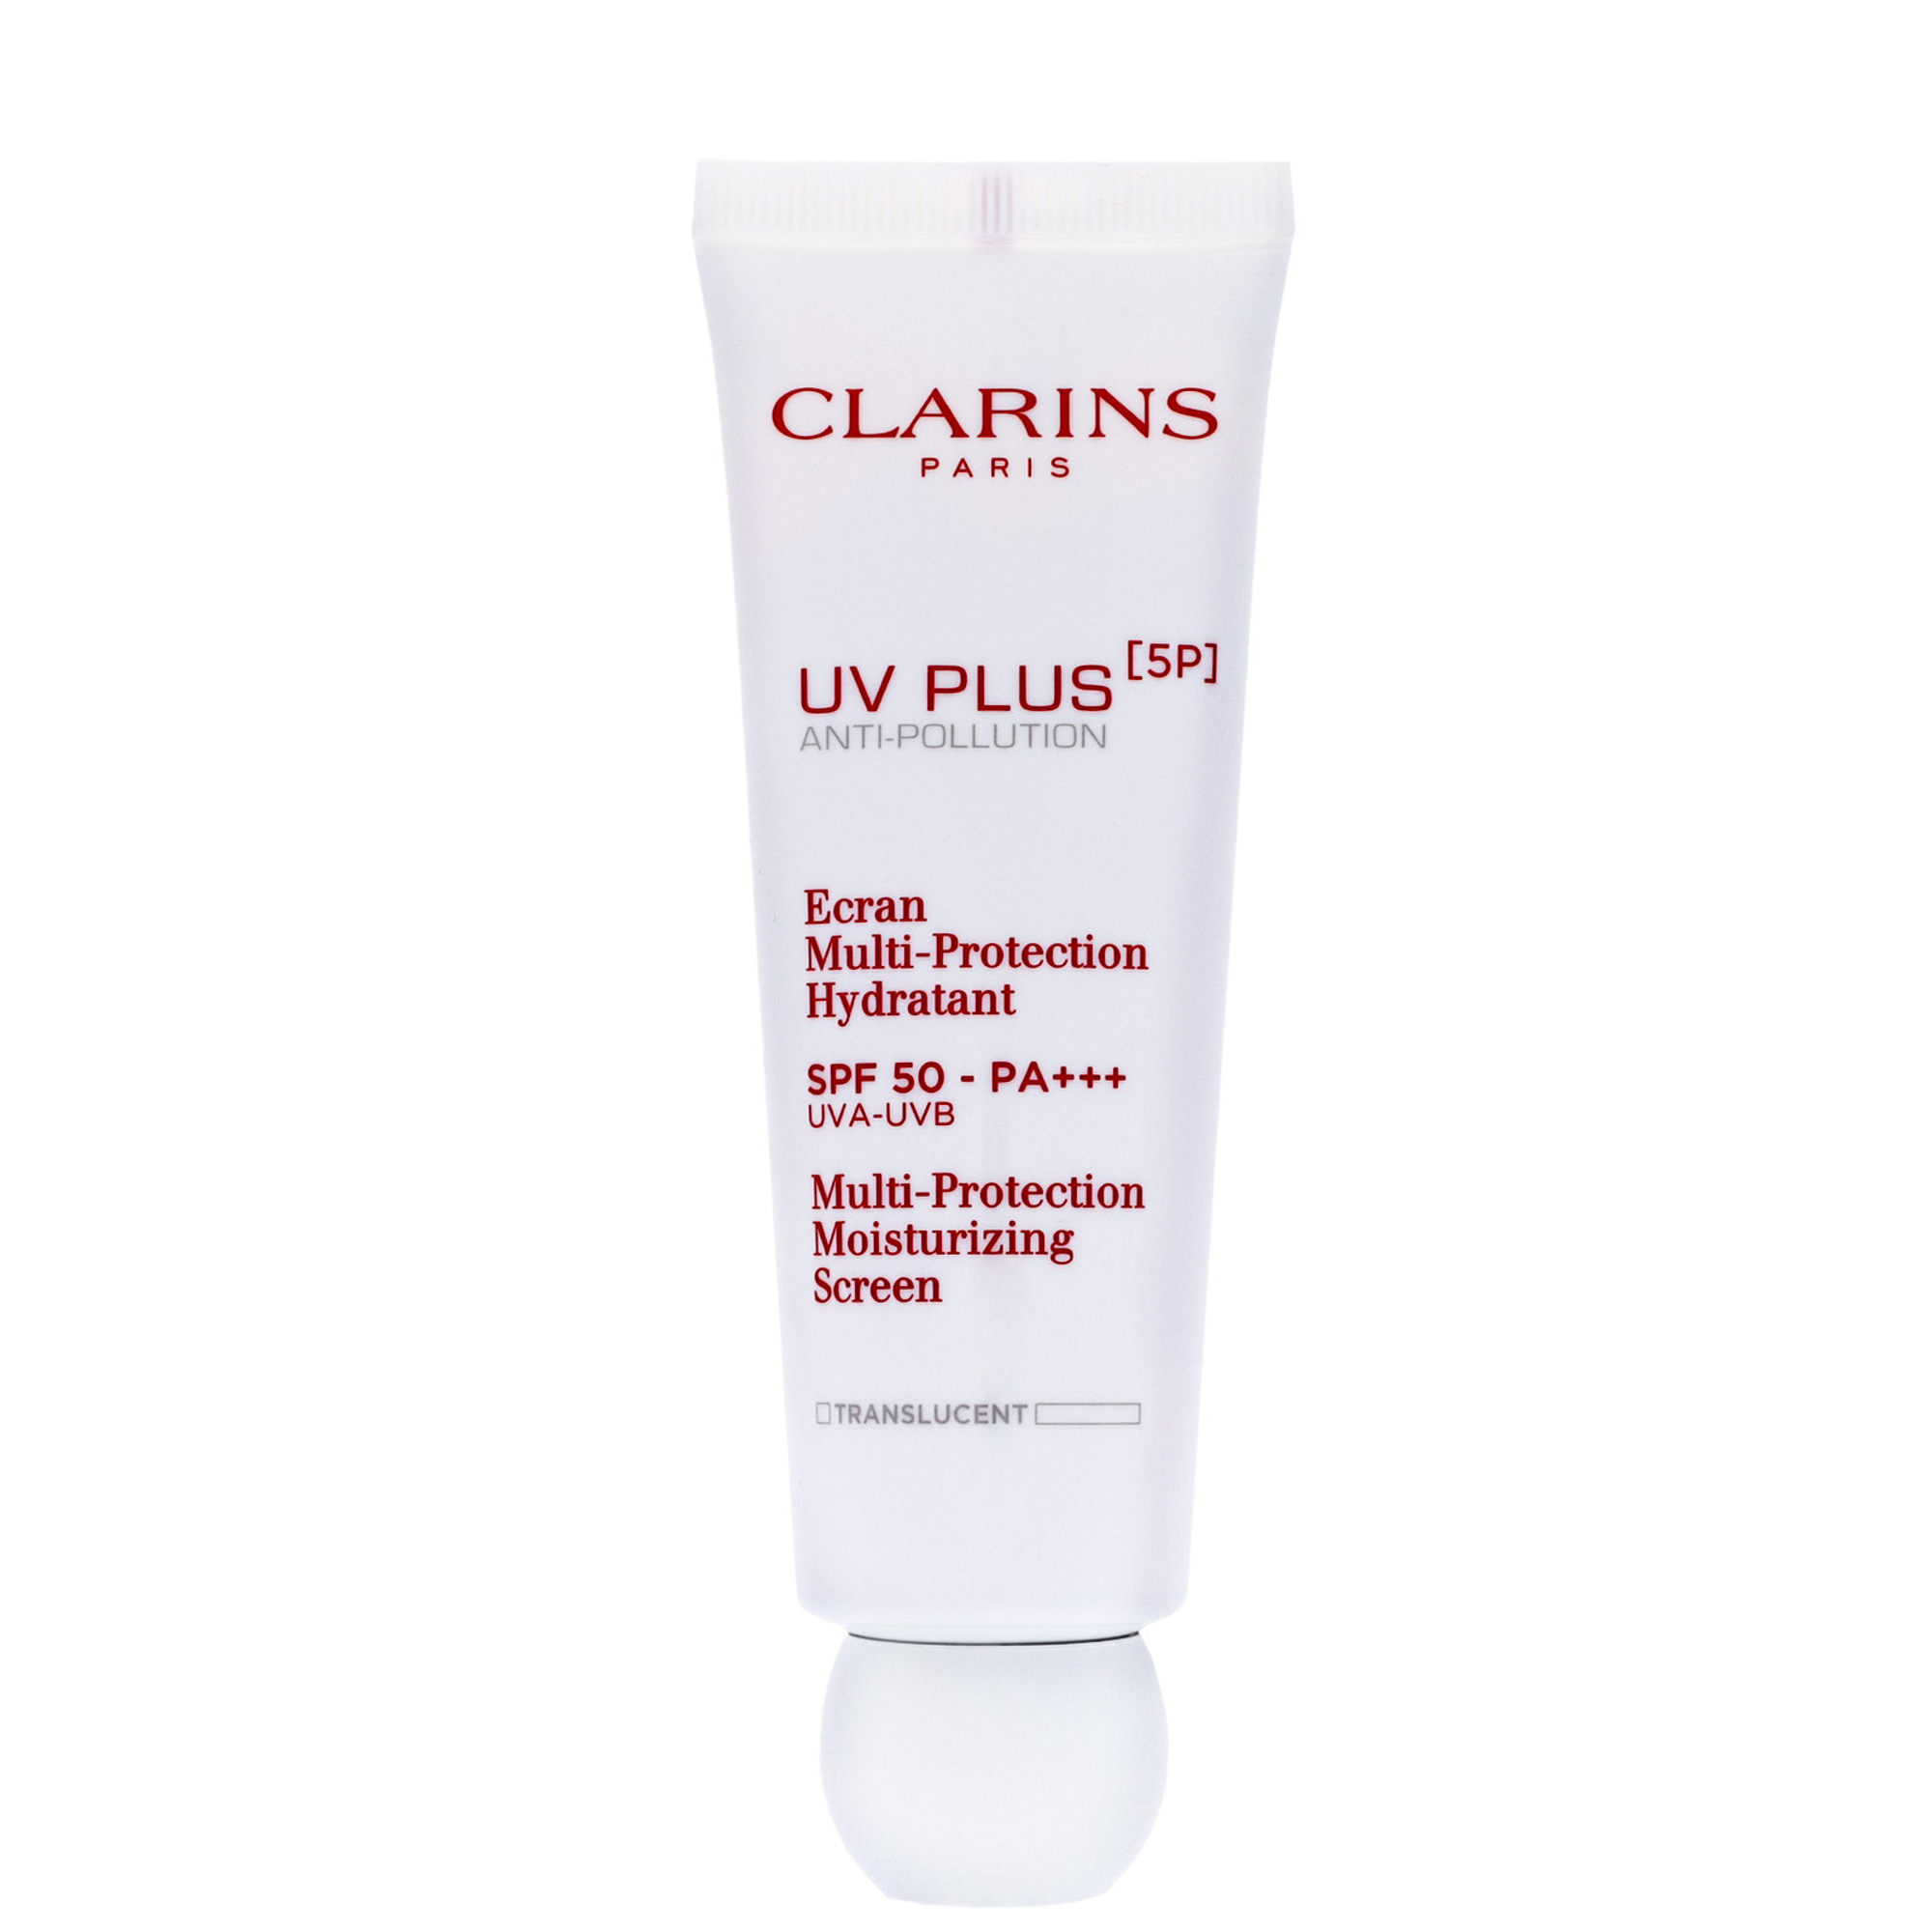 Image of Clarins UV Plus [5P] Anti-Pollution Multi-Protection Moisturizing Screen SPF50 Translucent 50ml